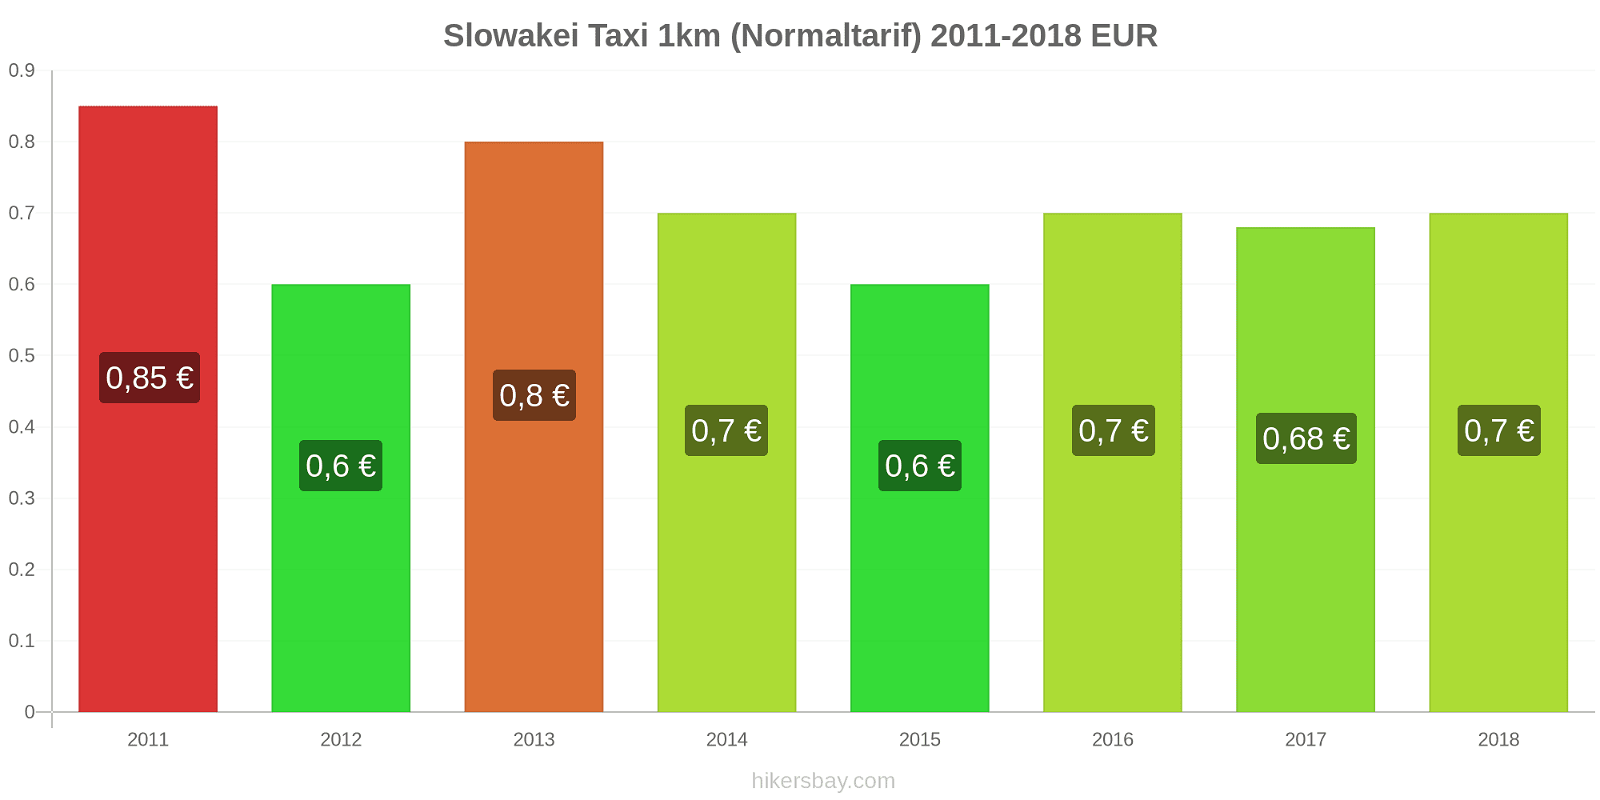 Slowakei Preisänderungen Taxi 1km (Normaltarif) hikersbay.com